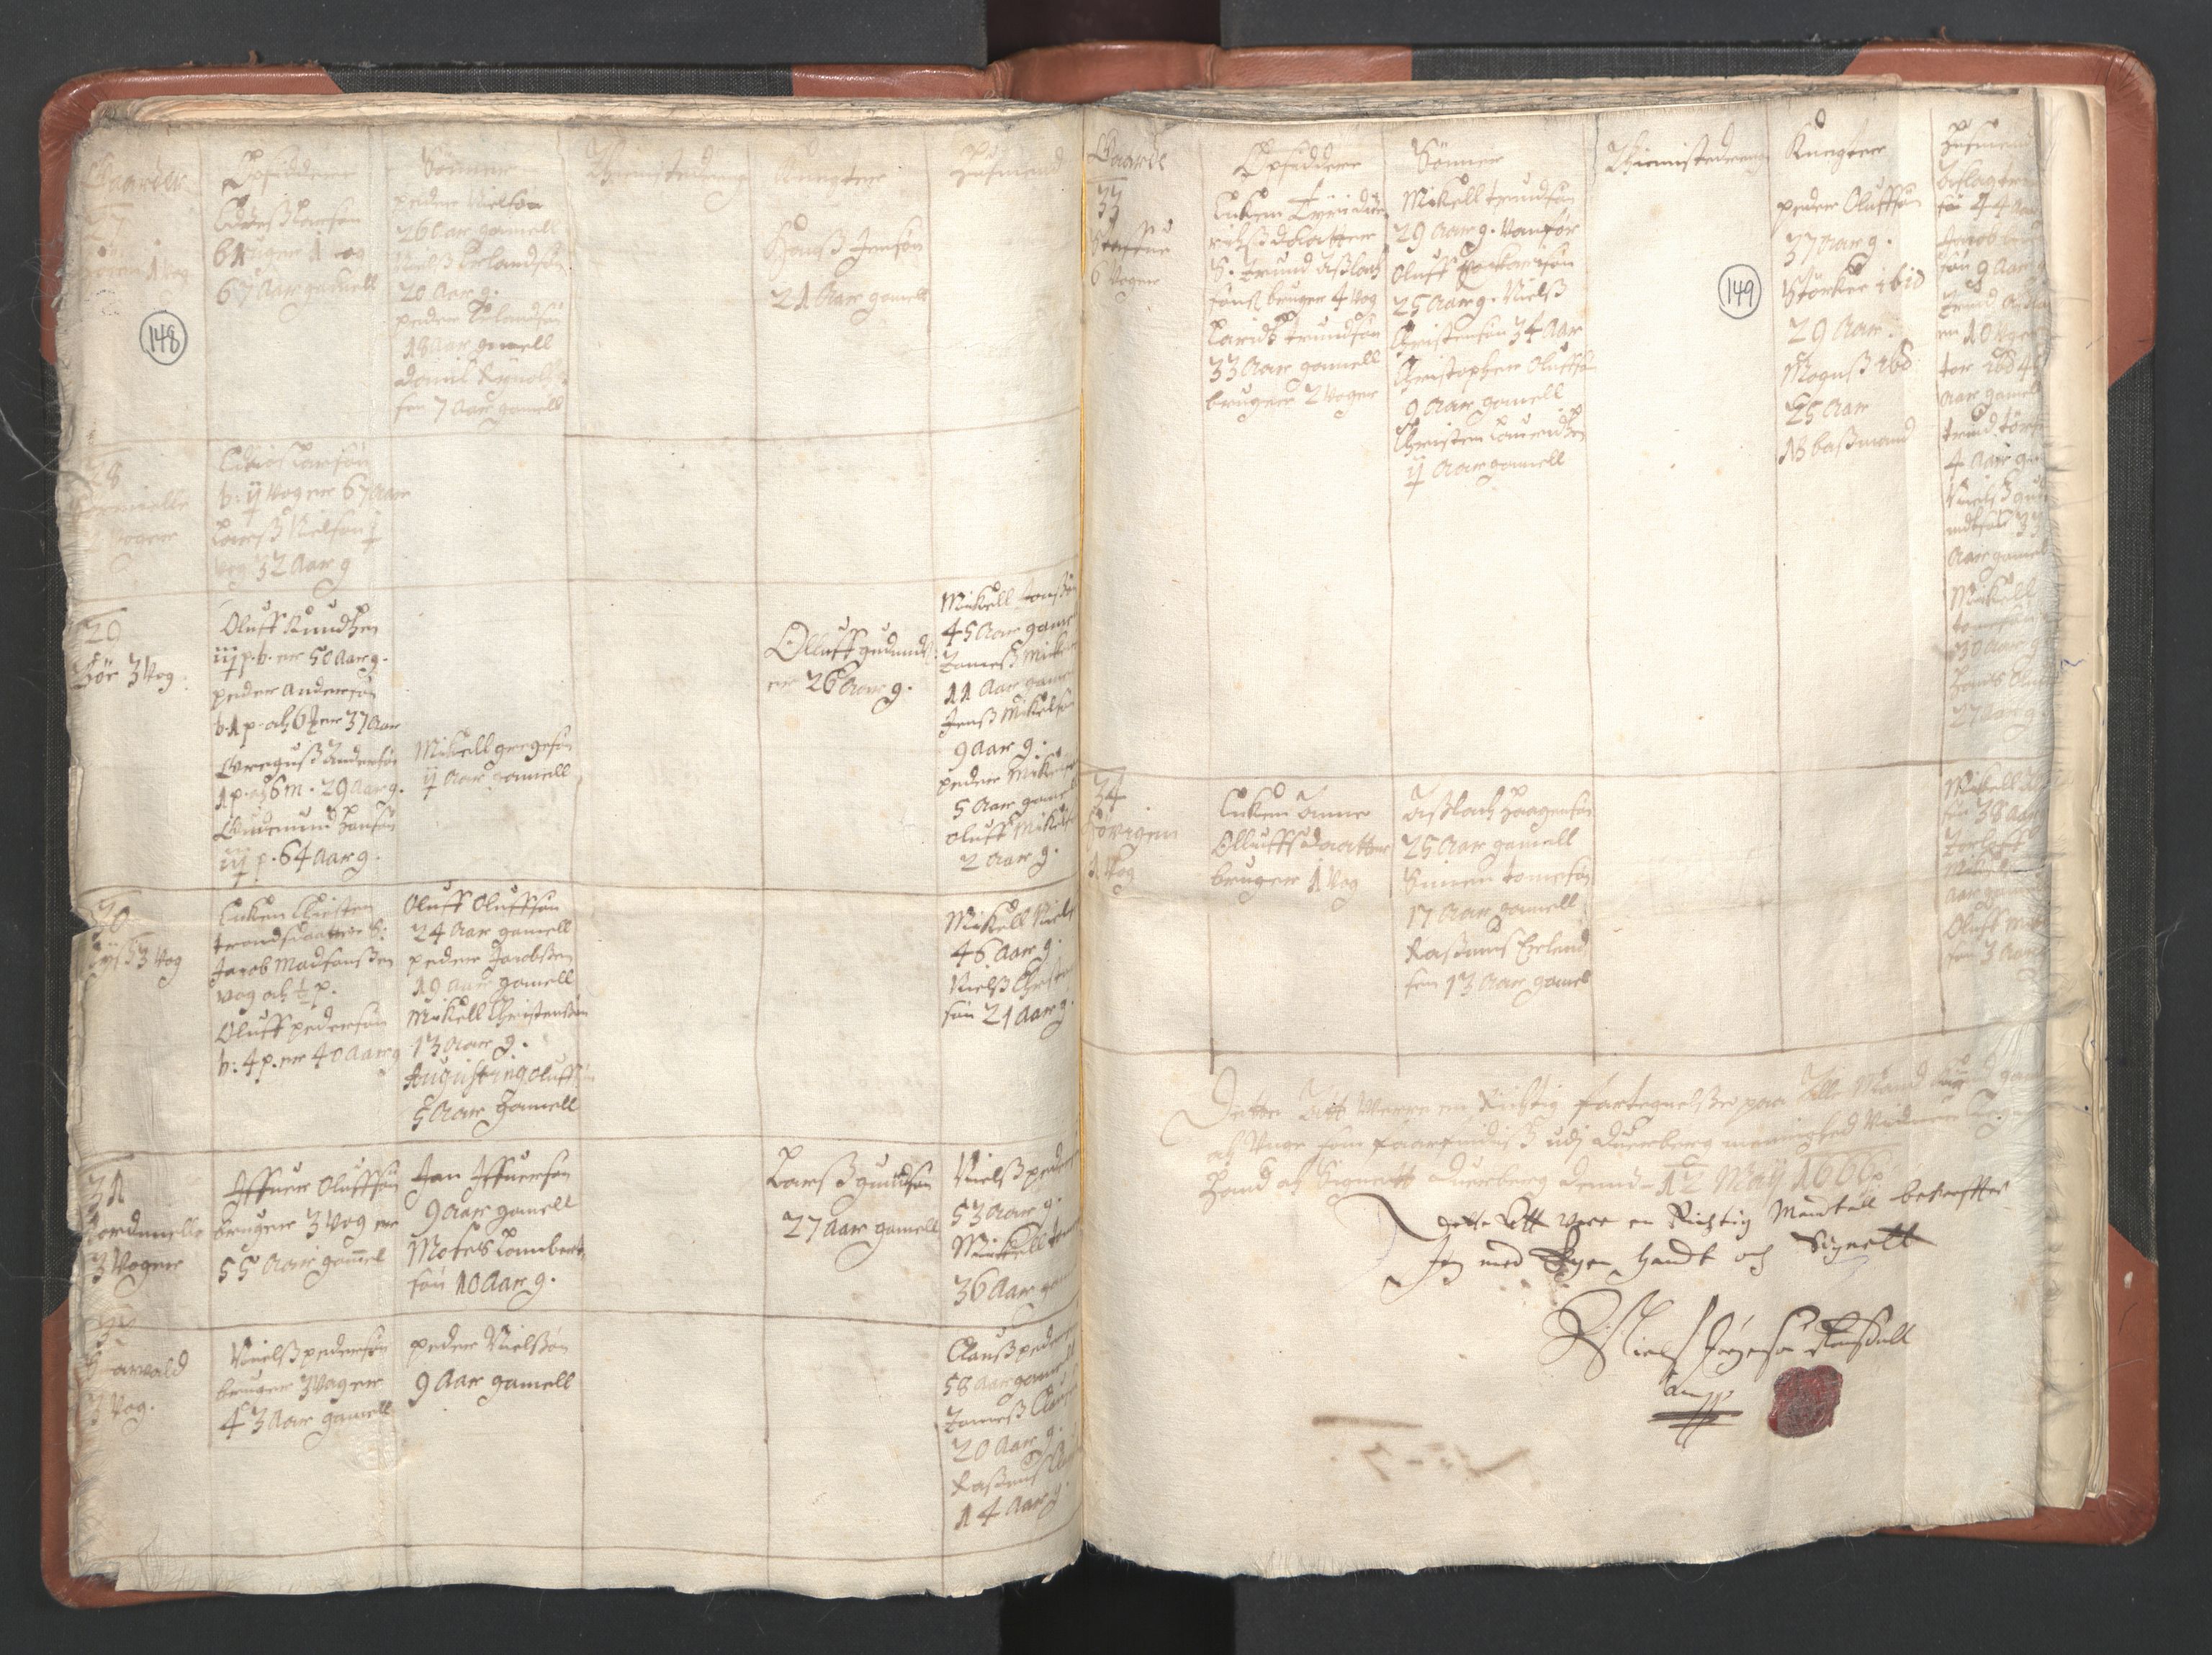 RA, Vicar's Census 1664-1666, no. 36: Lofoten and Vesterålen deanery, Senja deanery and Troms deanery, 1664-1666, p. 148-149